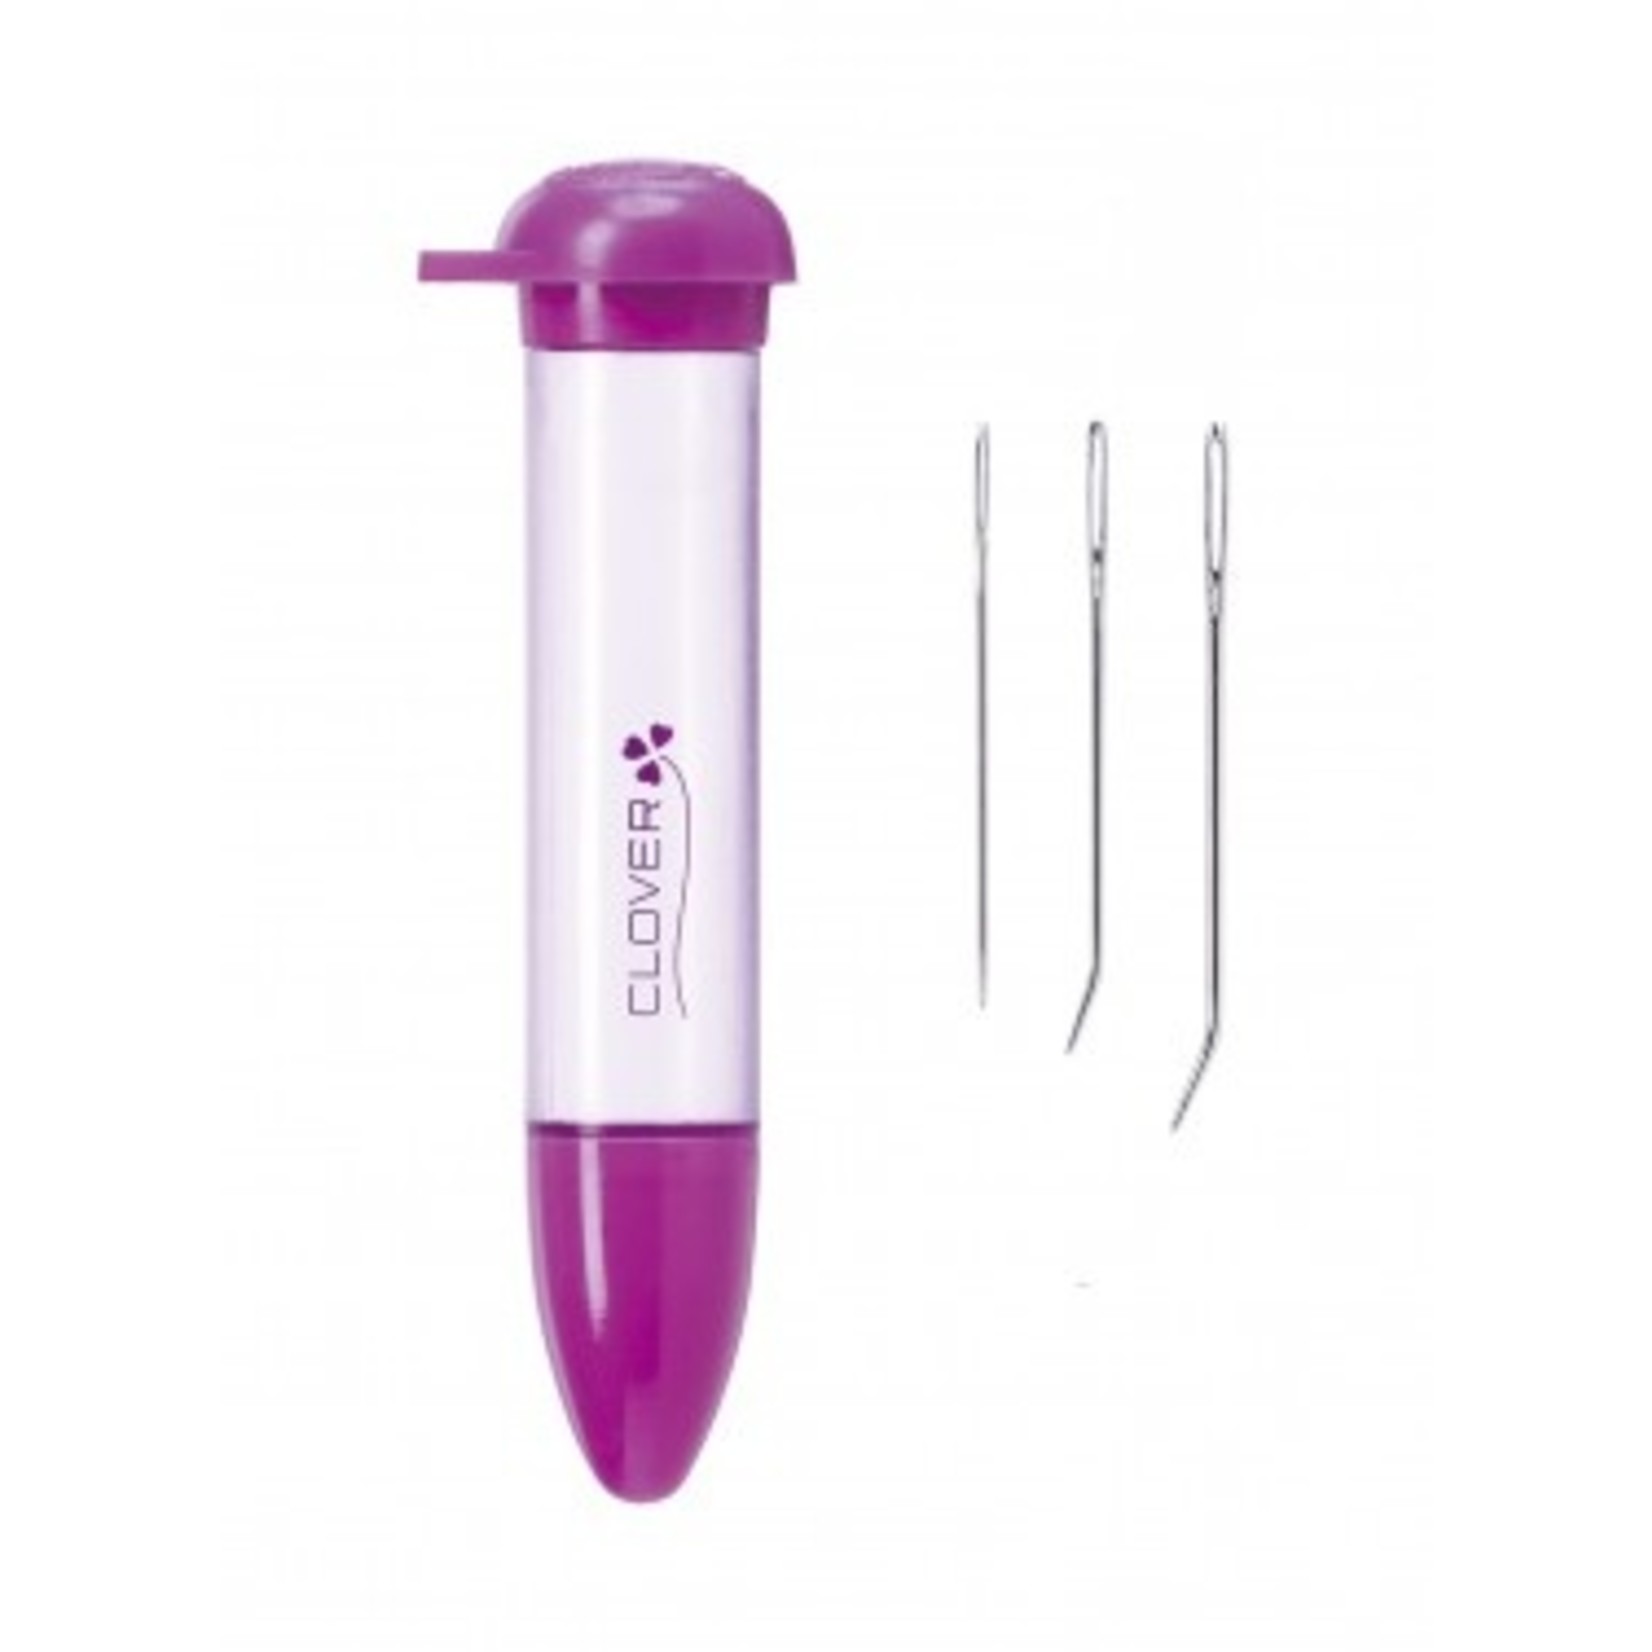 Clover Clover Darning Needle Set: Lace/Purple